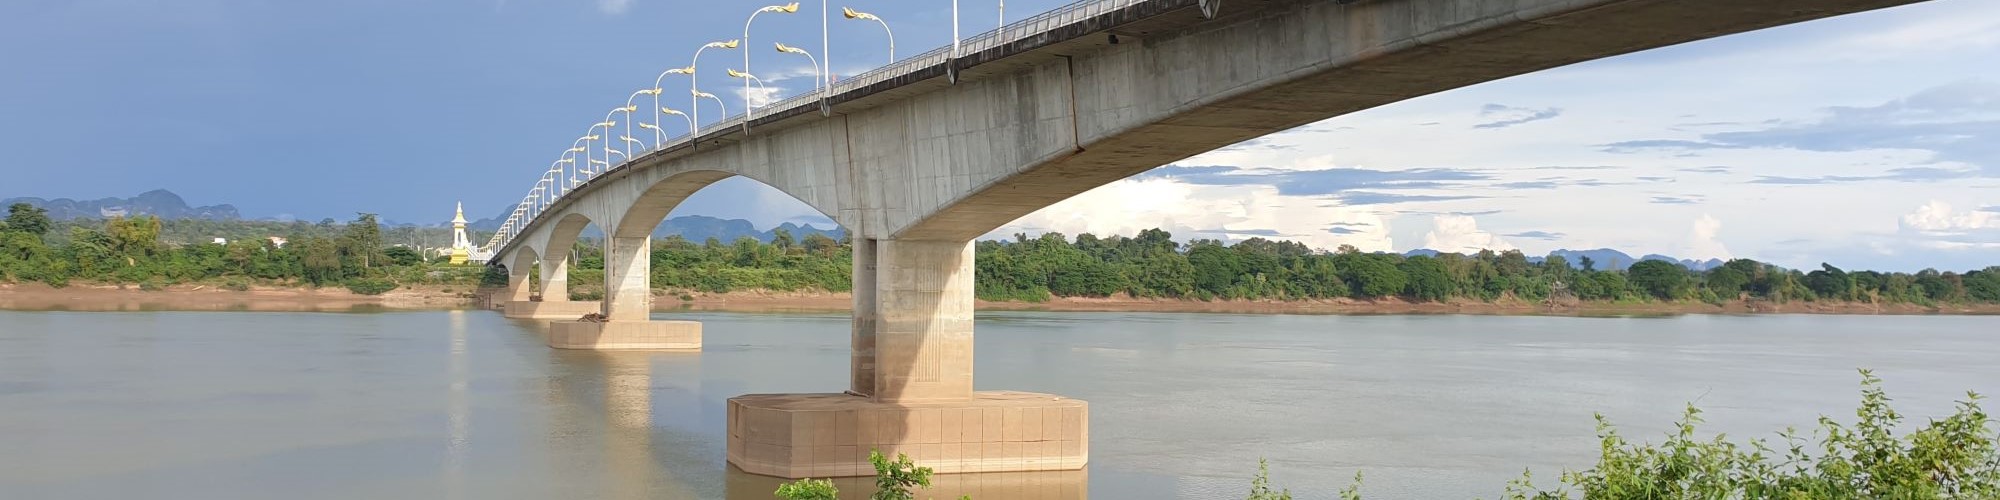 Thai/Lao Friendship Bridge #3, Nakhon Phanom Province